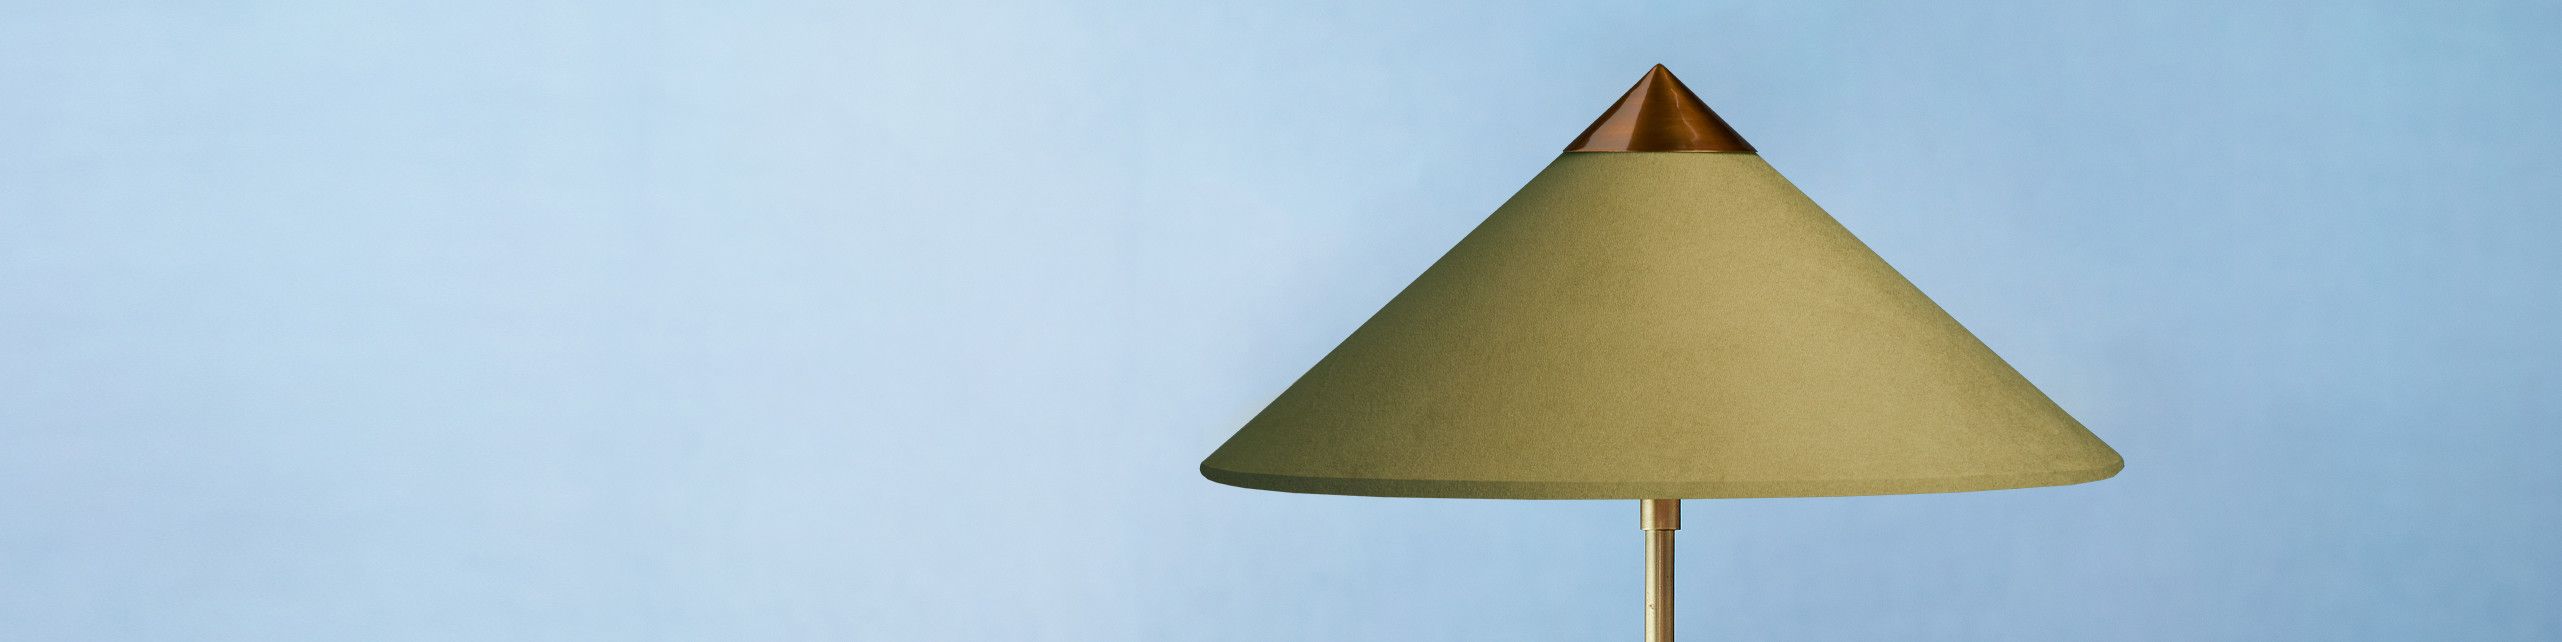 Cone lampshades, Tall cone shaped shades